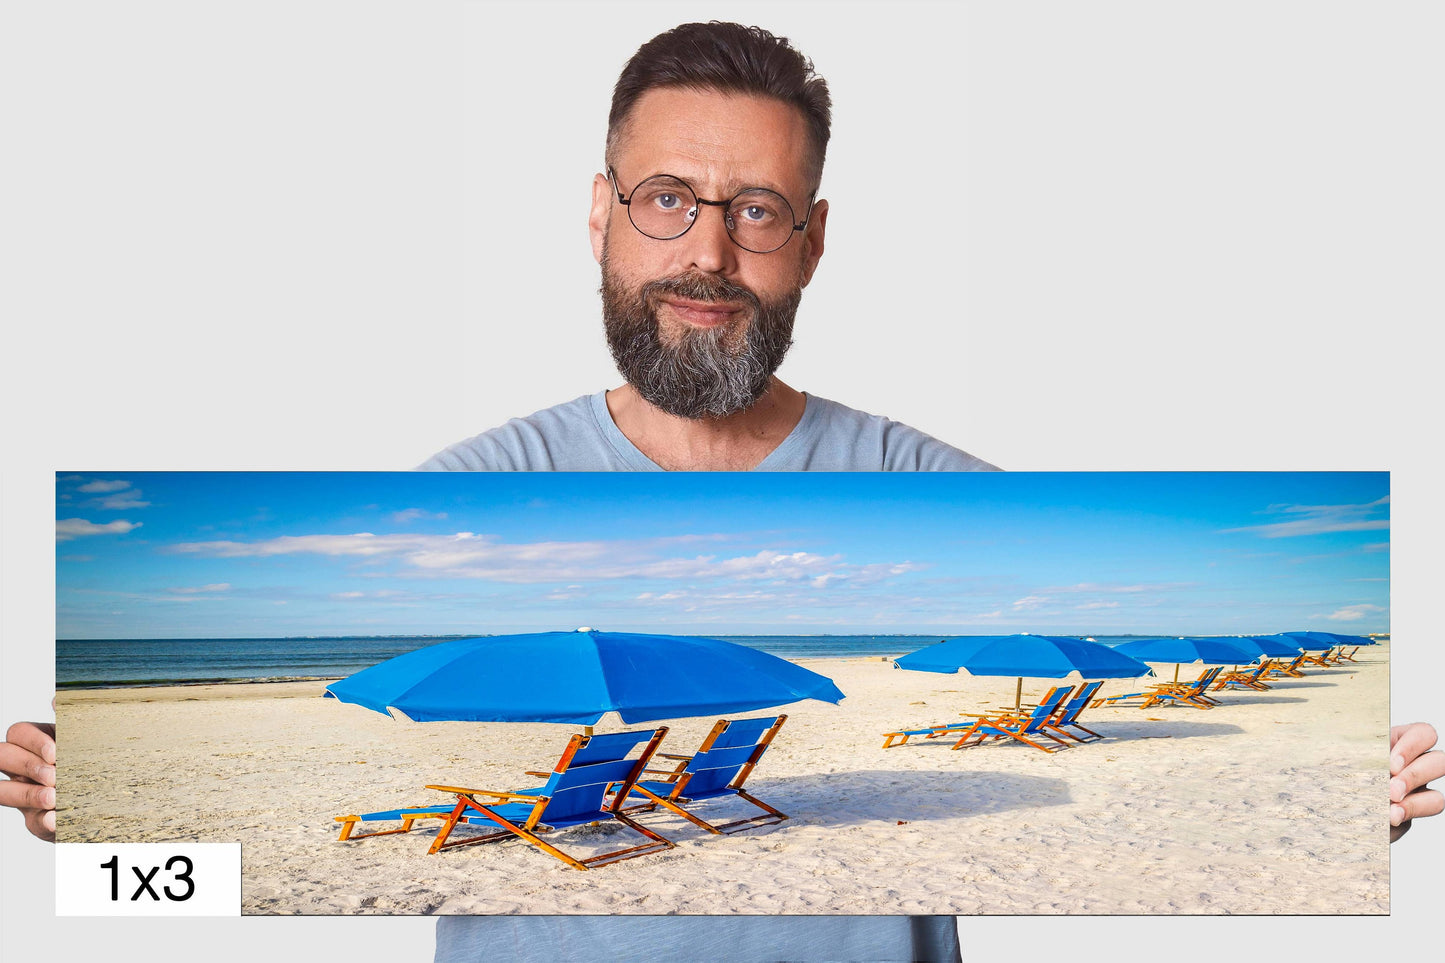 Seaside Escapade:  Blue Umbrella Beach Florida Seascape Photography Metal Canvas Wall Art Print